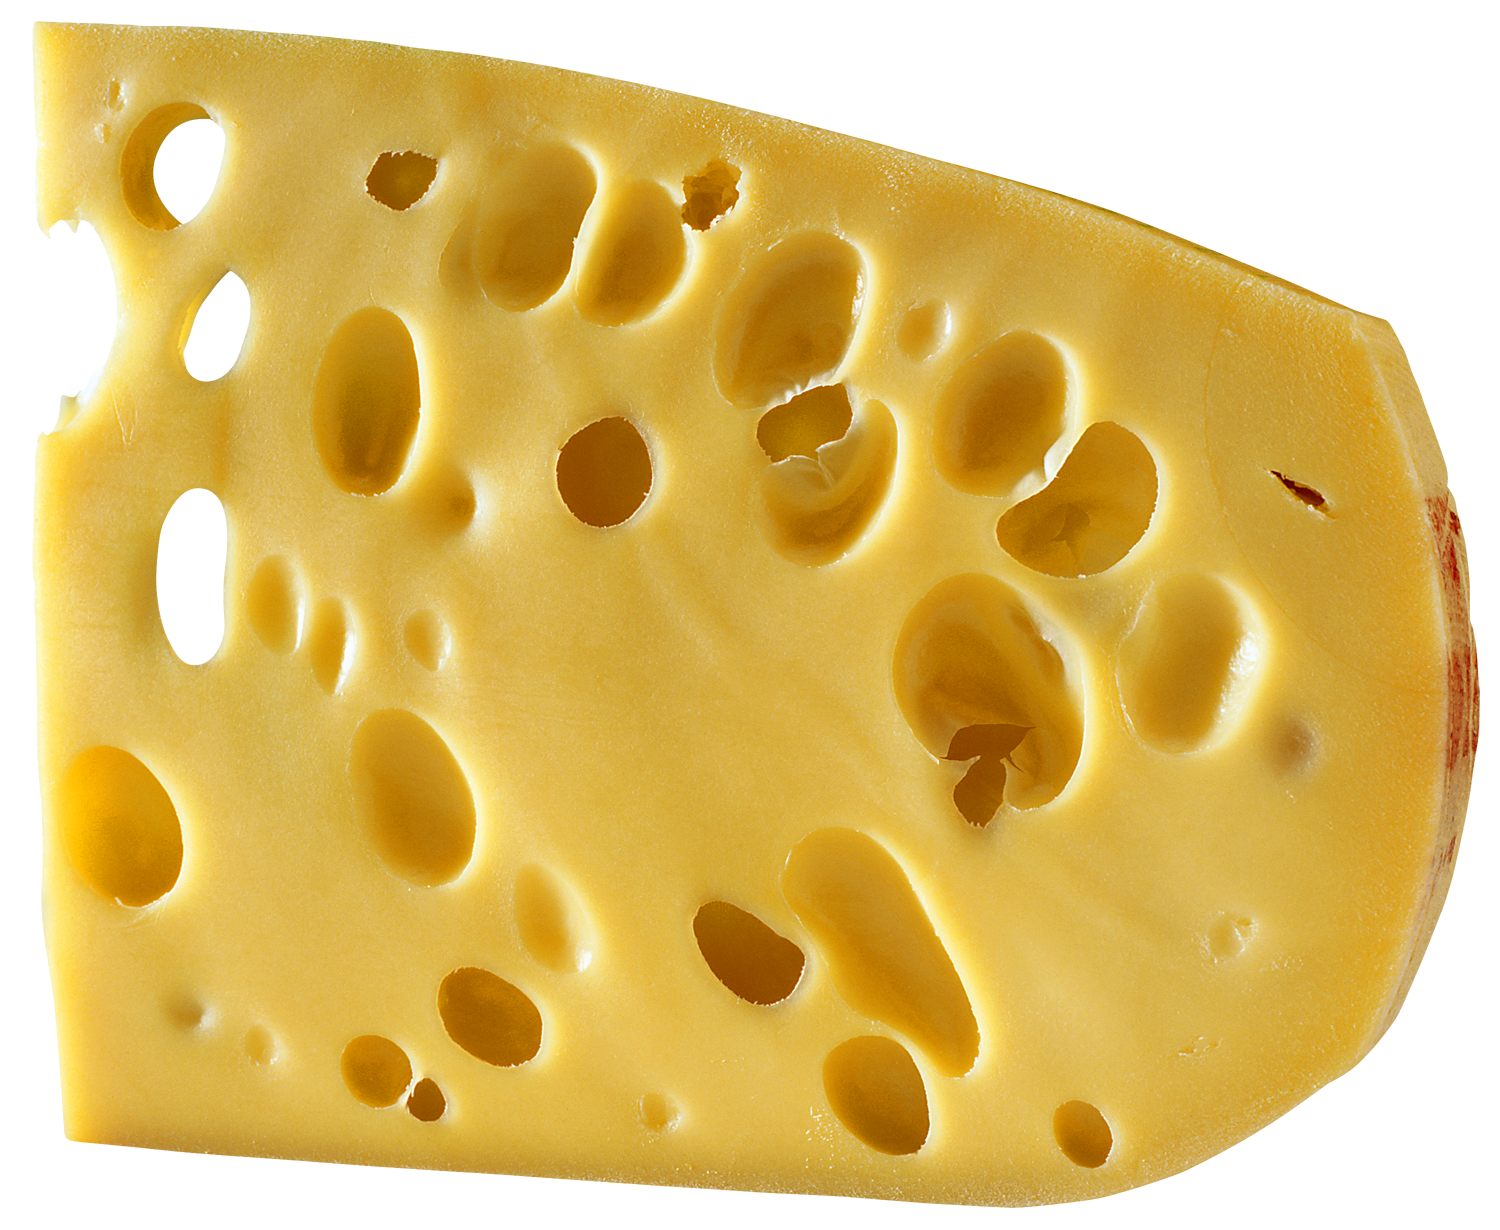 Сыр Маасдам Swiss. Сыр швейцарский Маасдам. Маасдам Джагибо. Дырки в сыре.